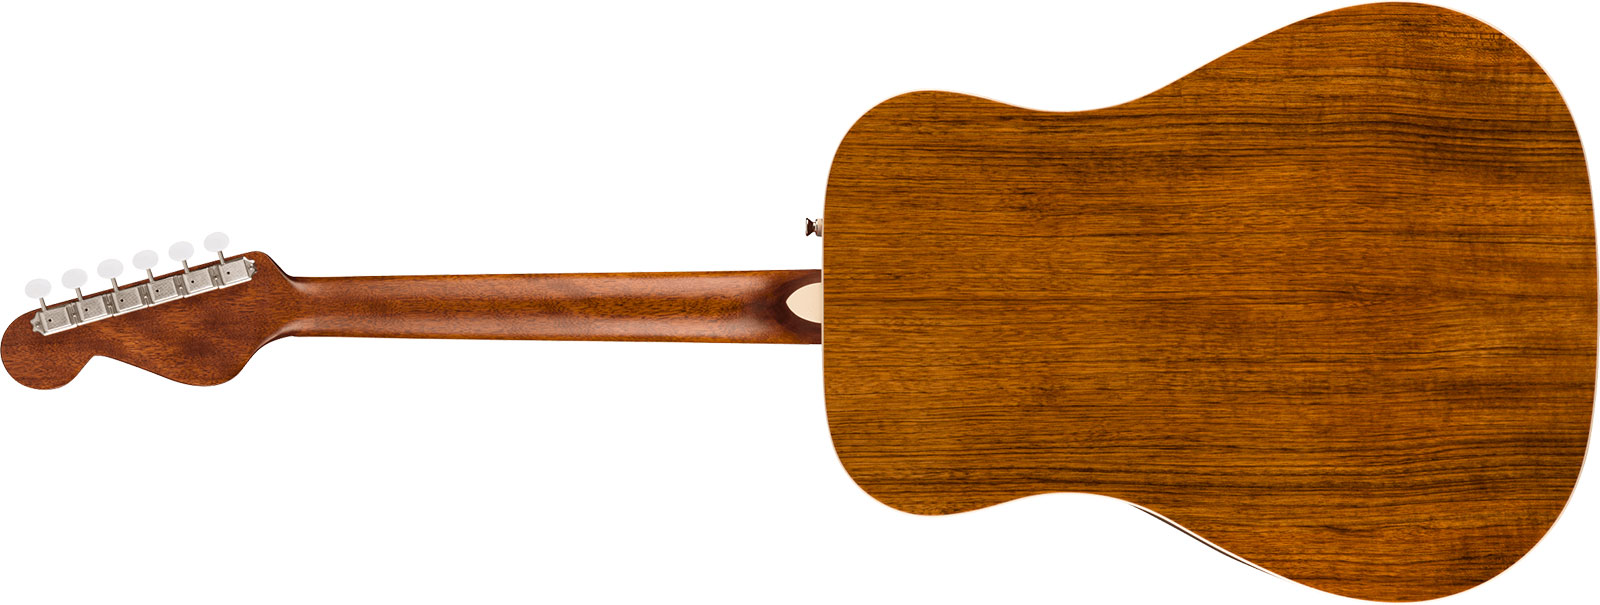 Fender King Vintage California Dreadnought Epicea Ovangkol Ova - Mojave - Elektroakustische Gitarre - Variation 1